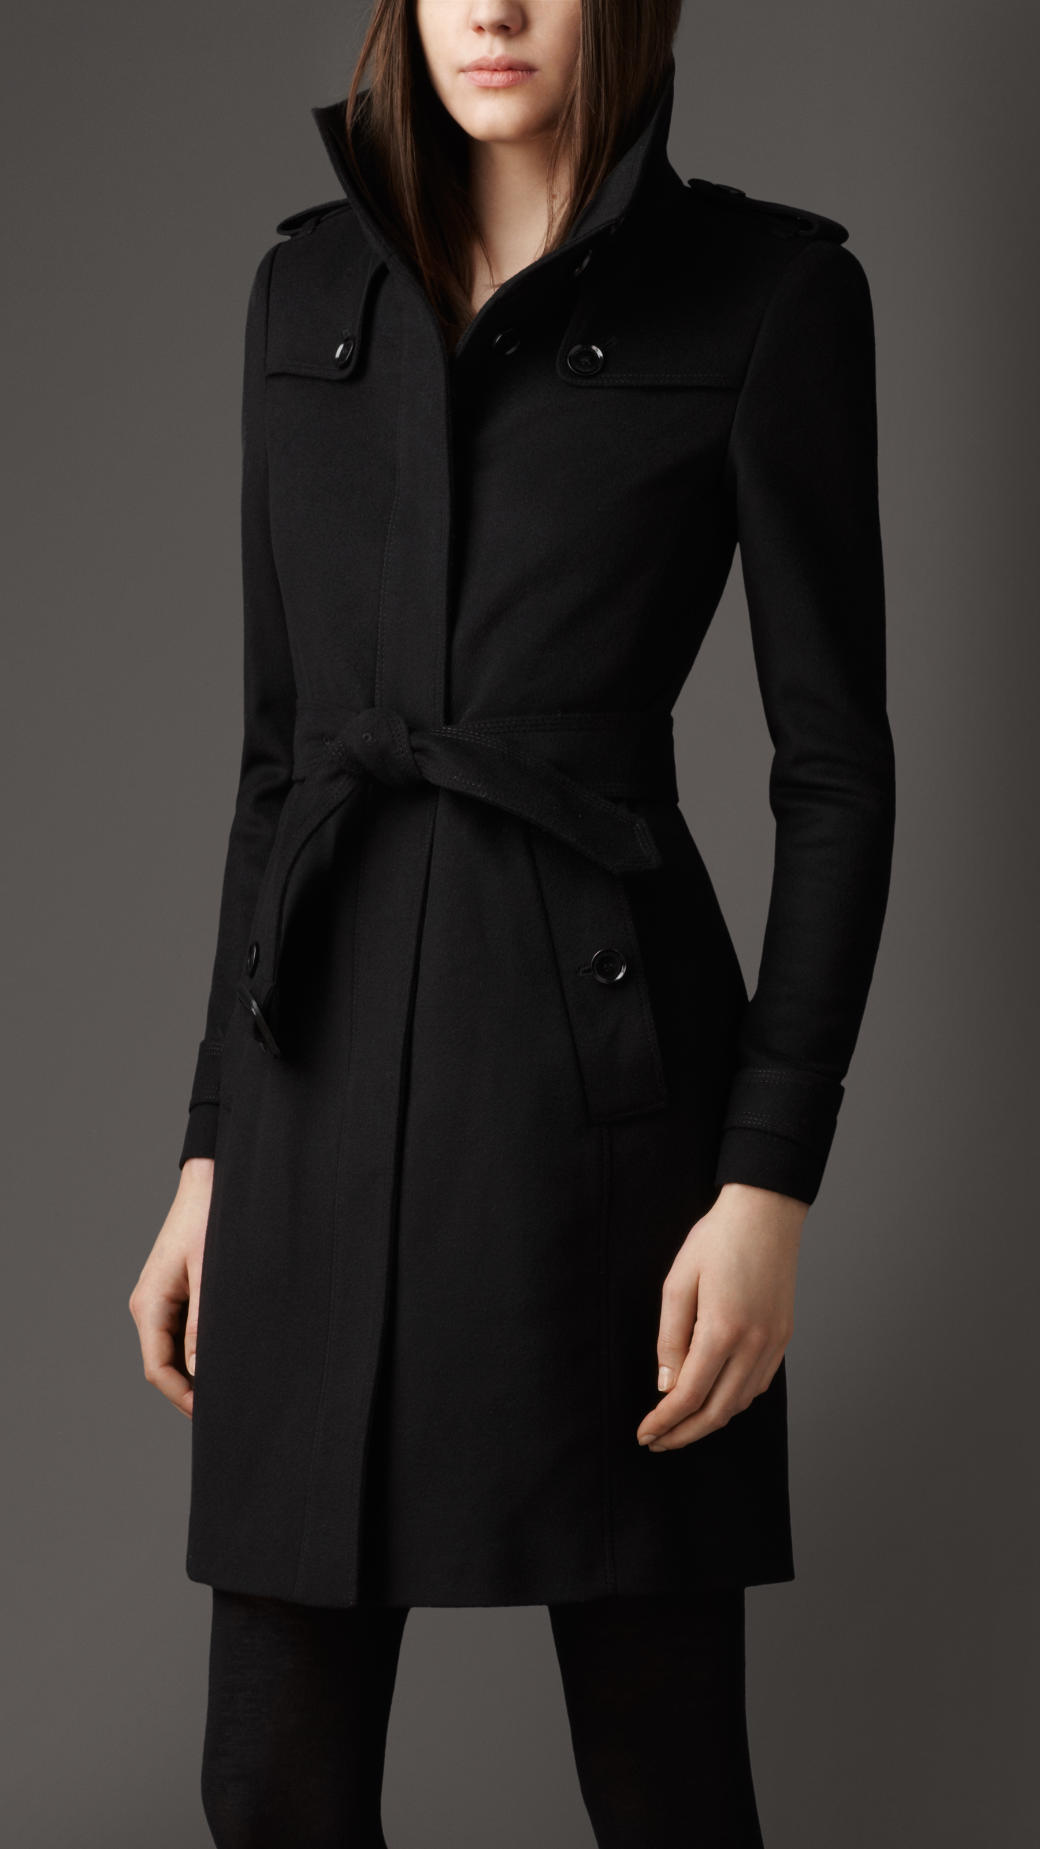 Lyst - Burberry Fitted Virgin Wool Coat in Black